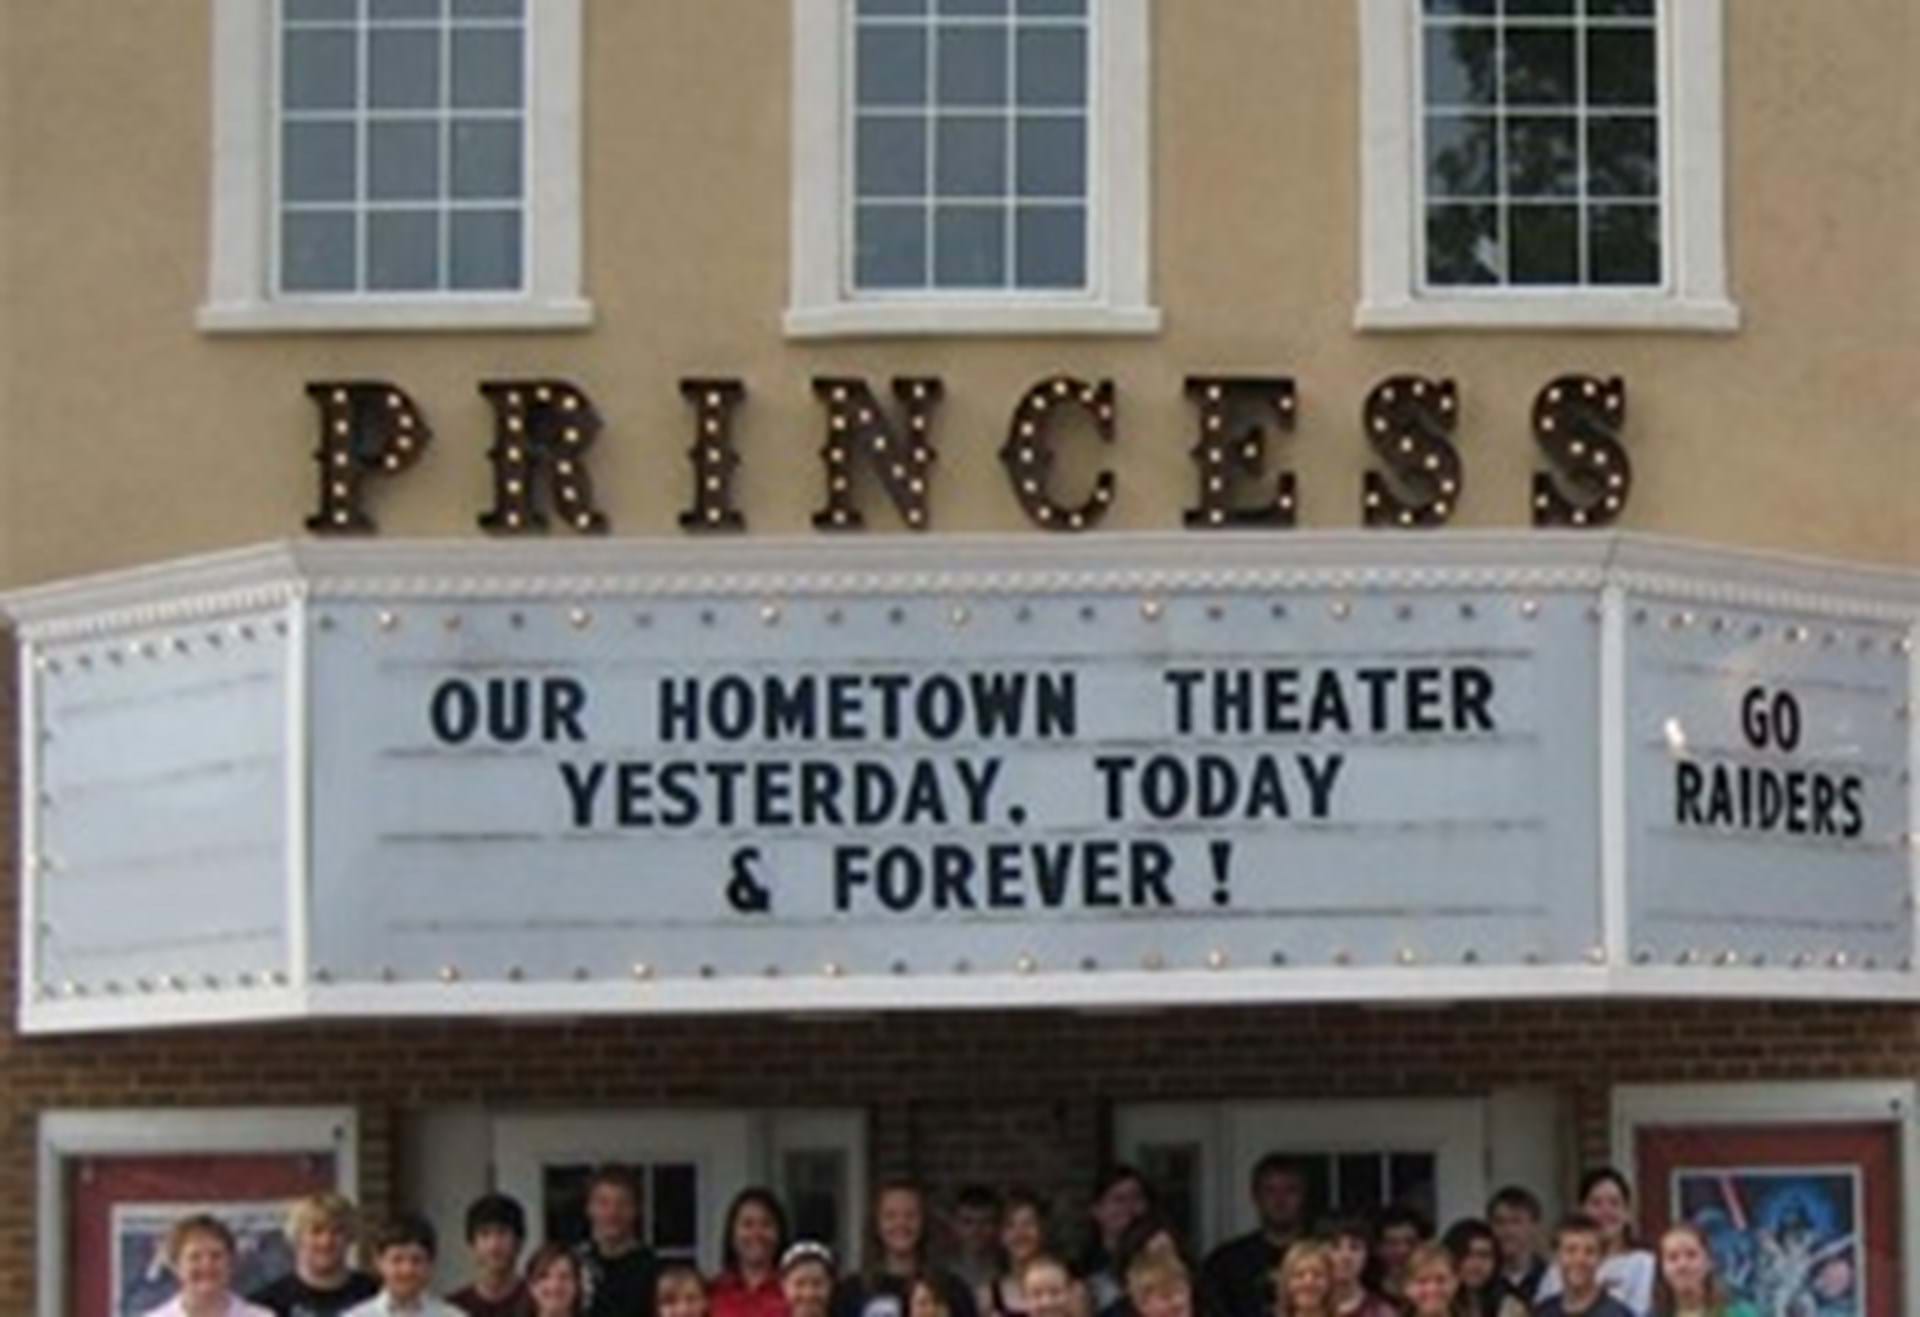 Princess Theater